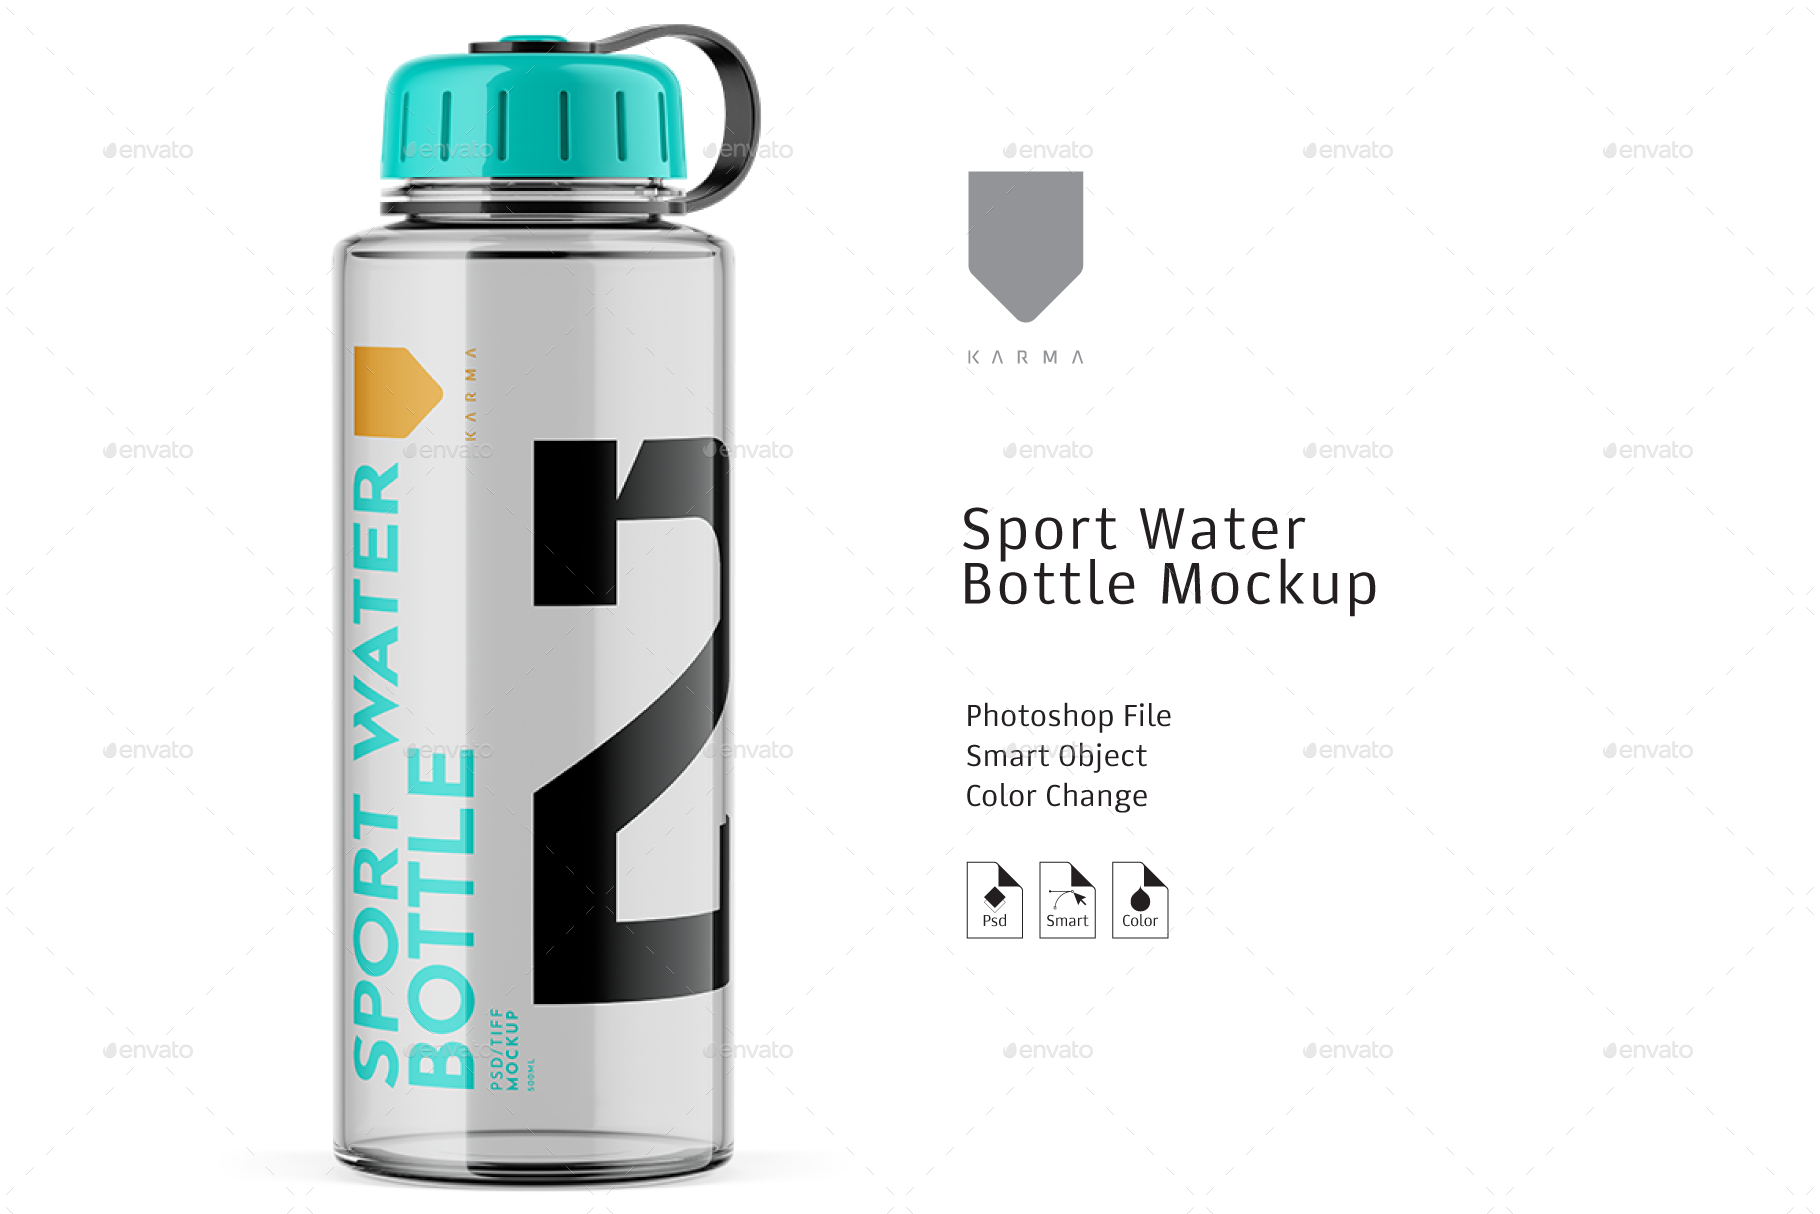 Download Sport Water Bottle Mockup by KarmaStore | GraphicRiver